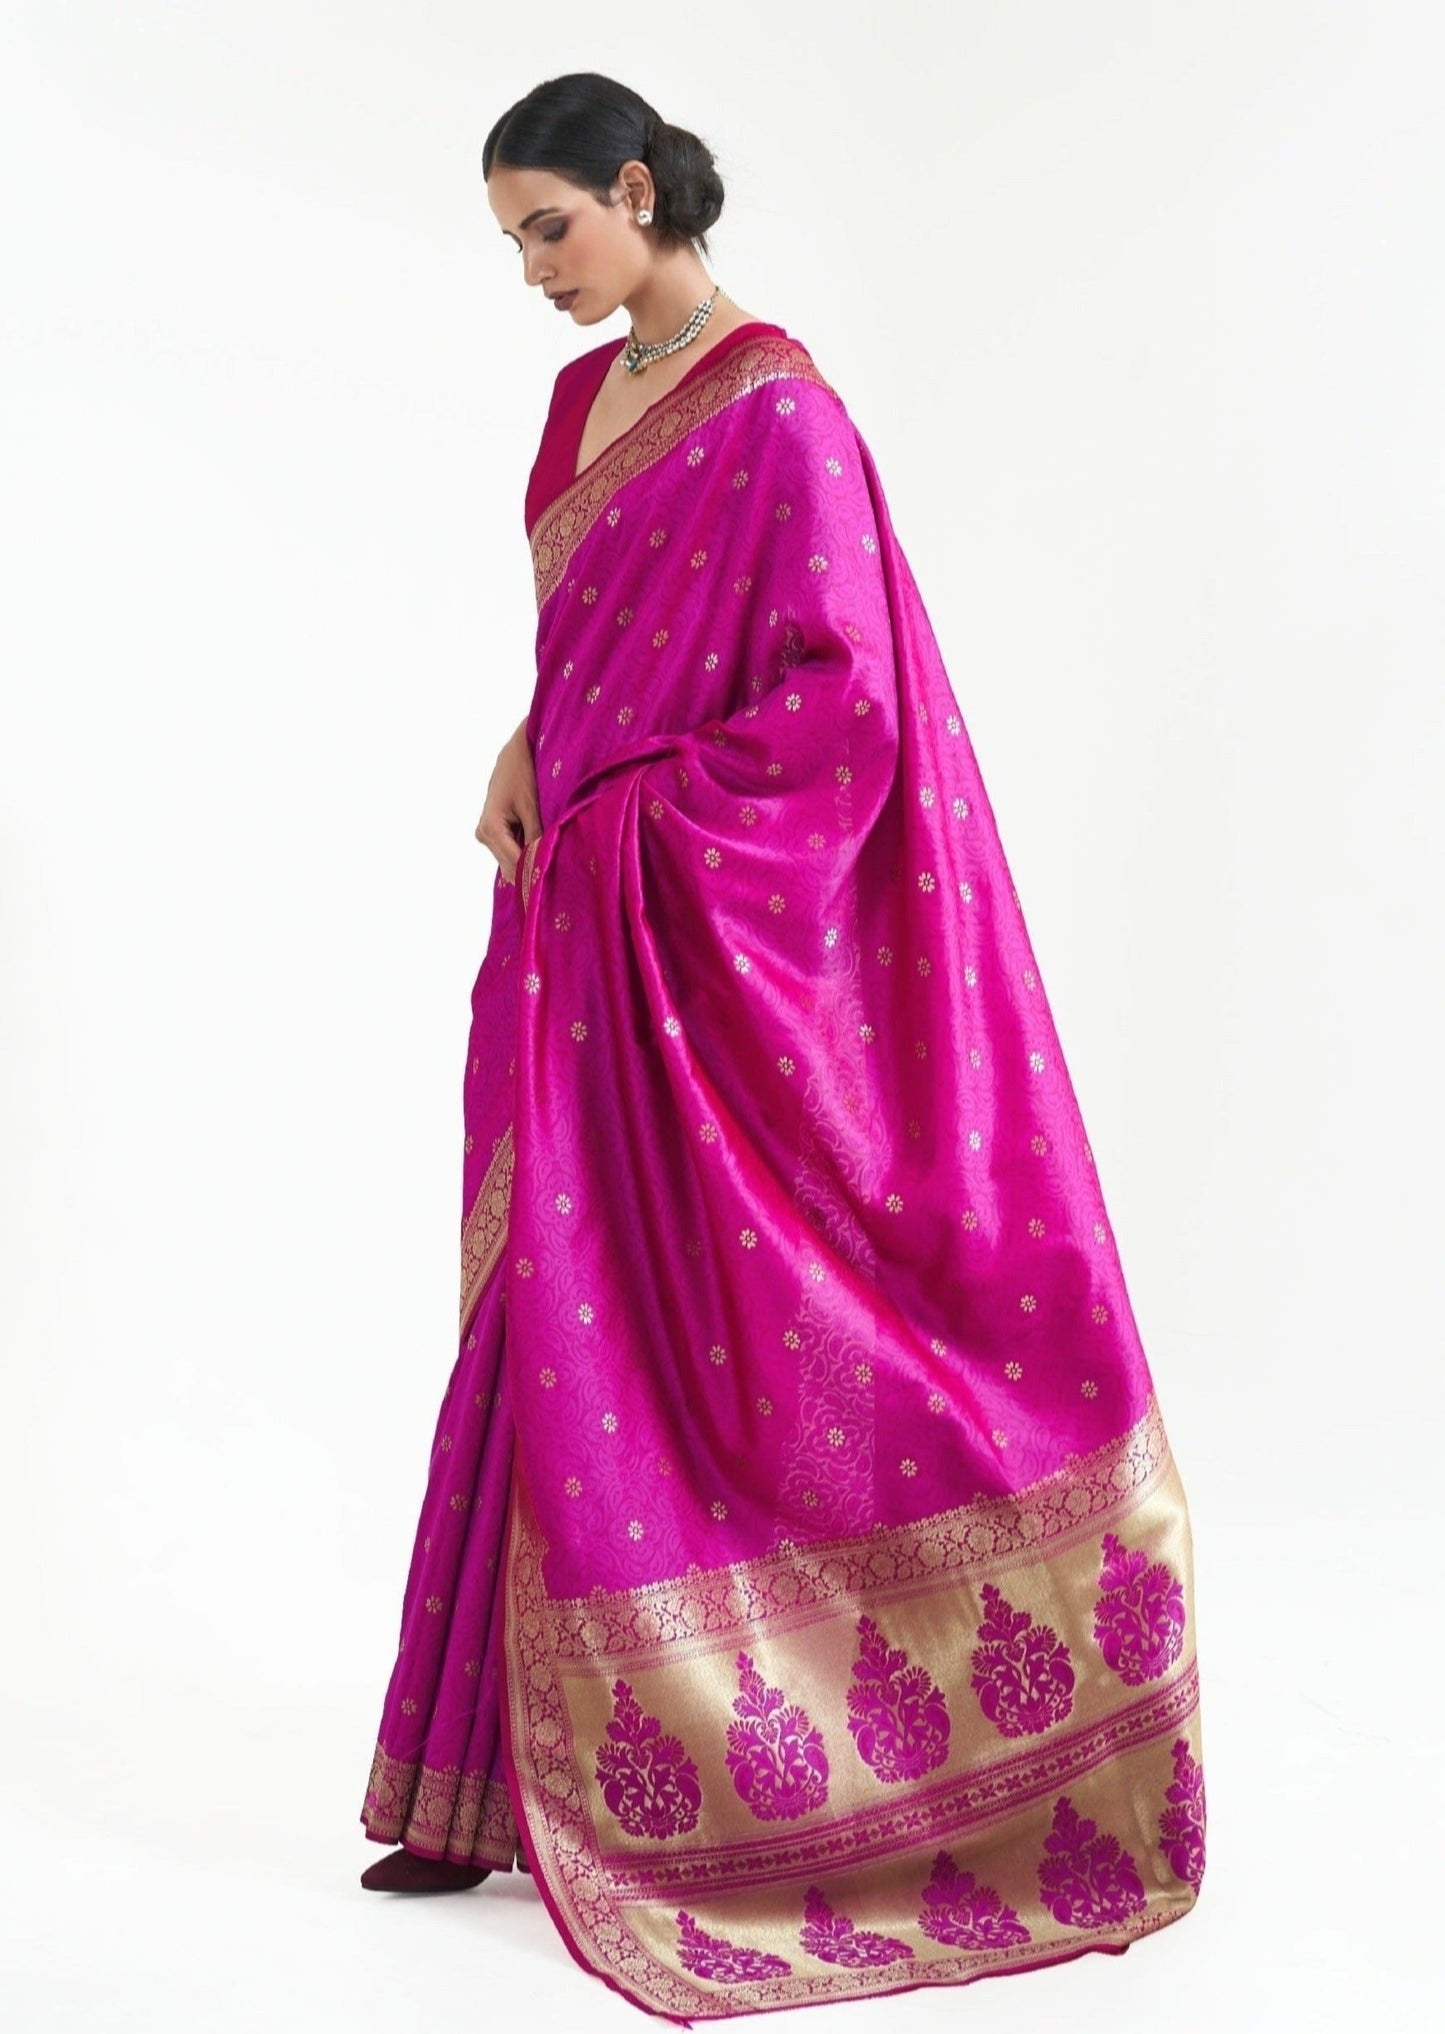 Banarasi silk hot pink bridal sarees online shopping india.